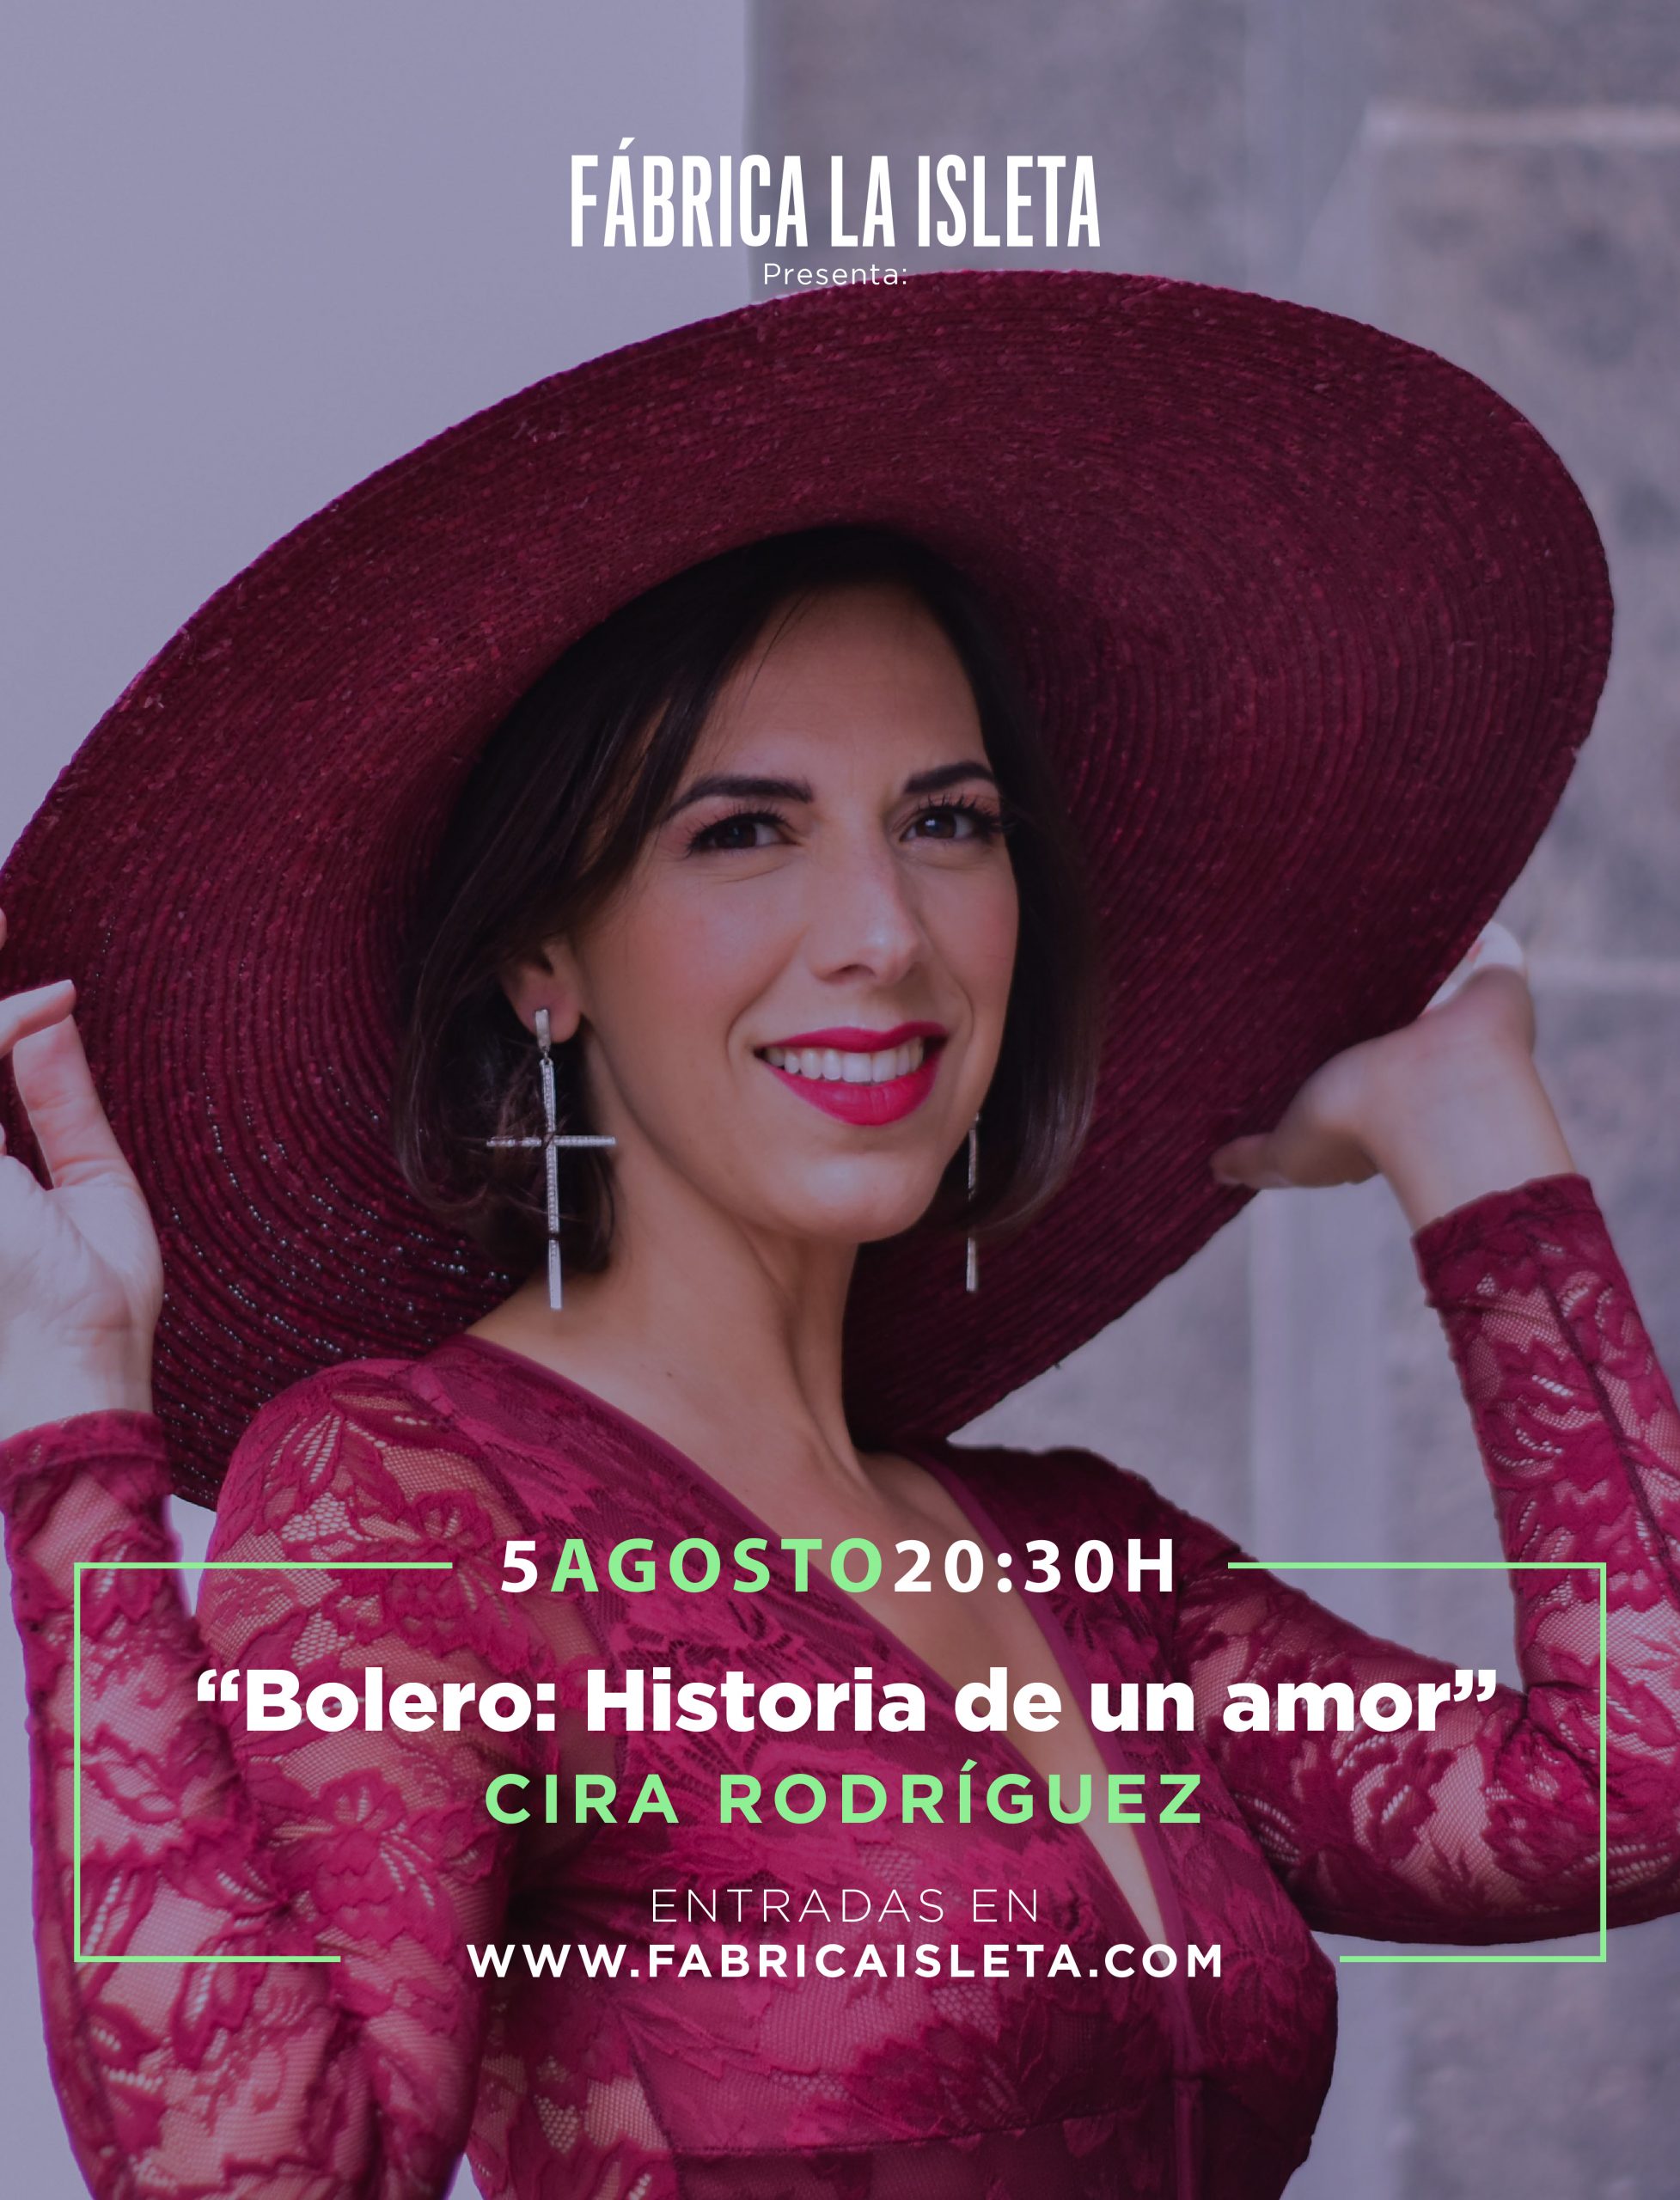 CIRA-RODRIGUEZ-02-scaled